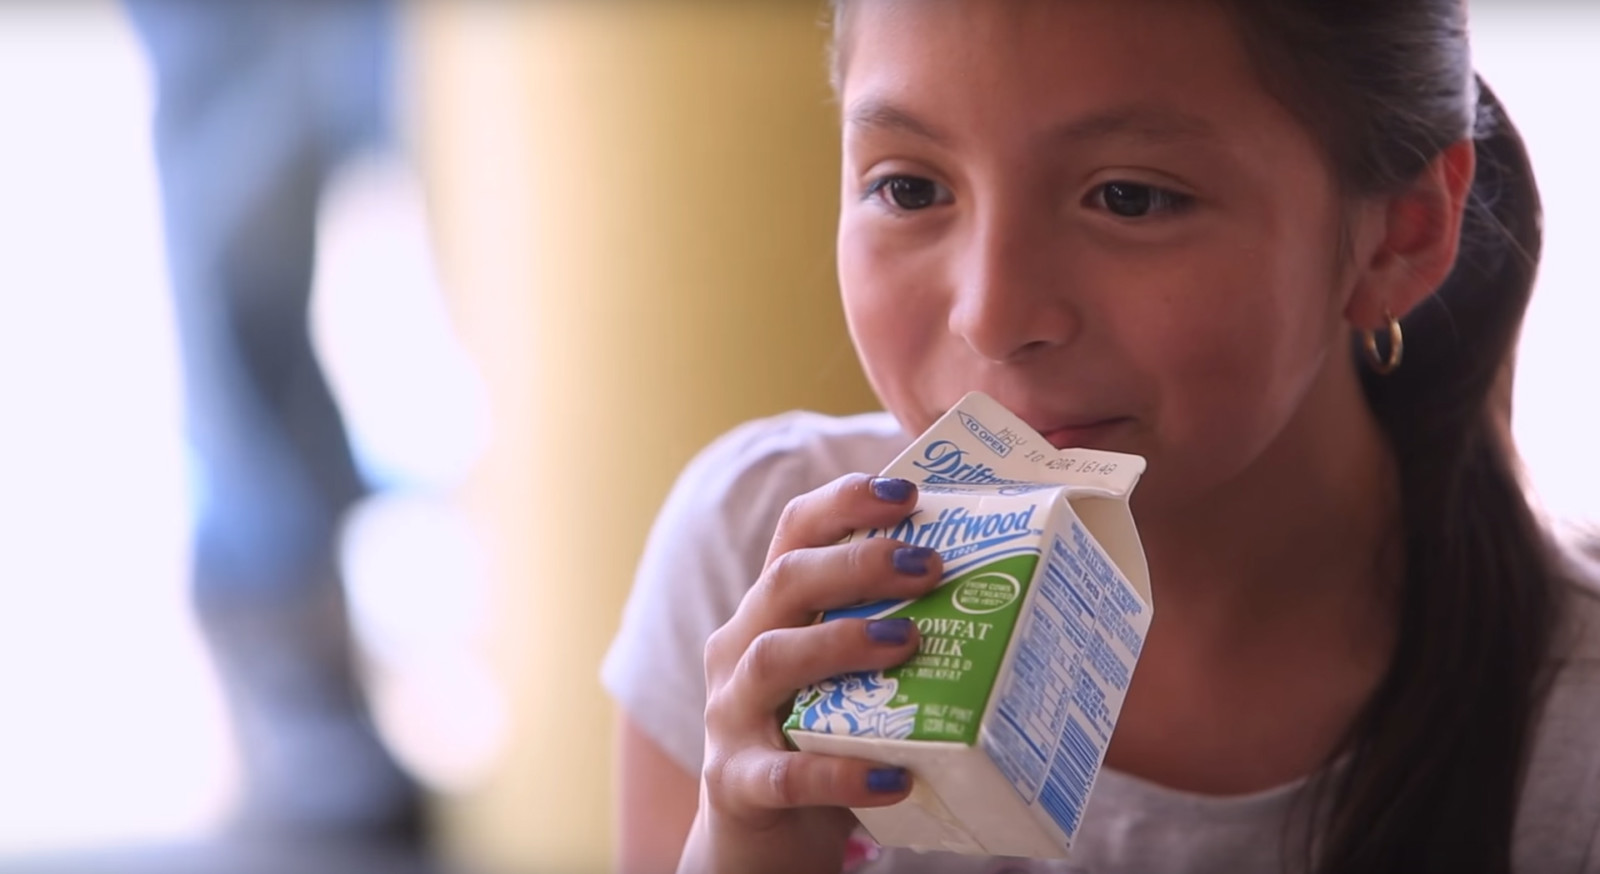 Latina girl drinsk white milk at school lunch or breakfast